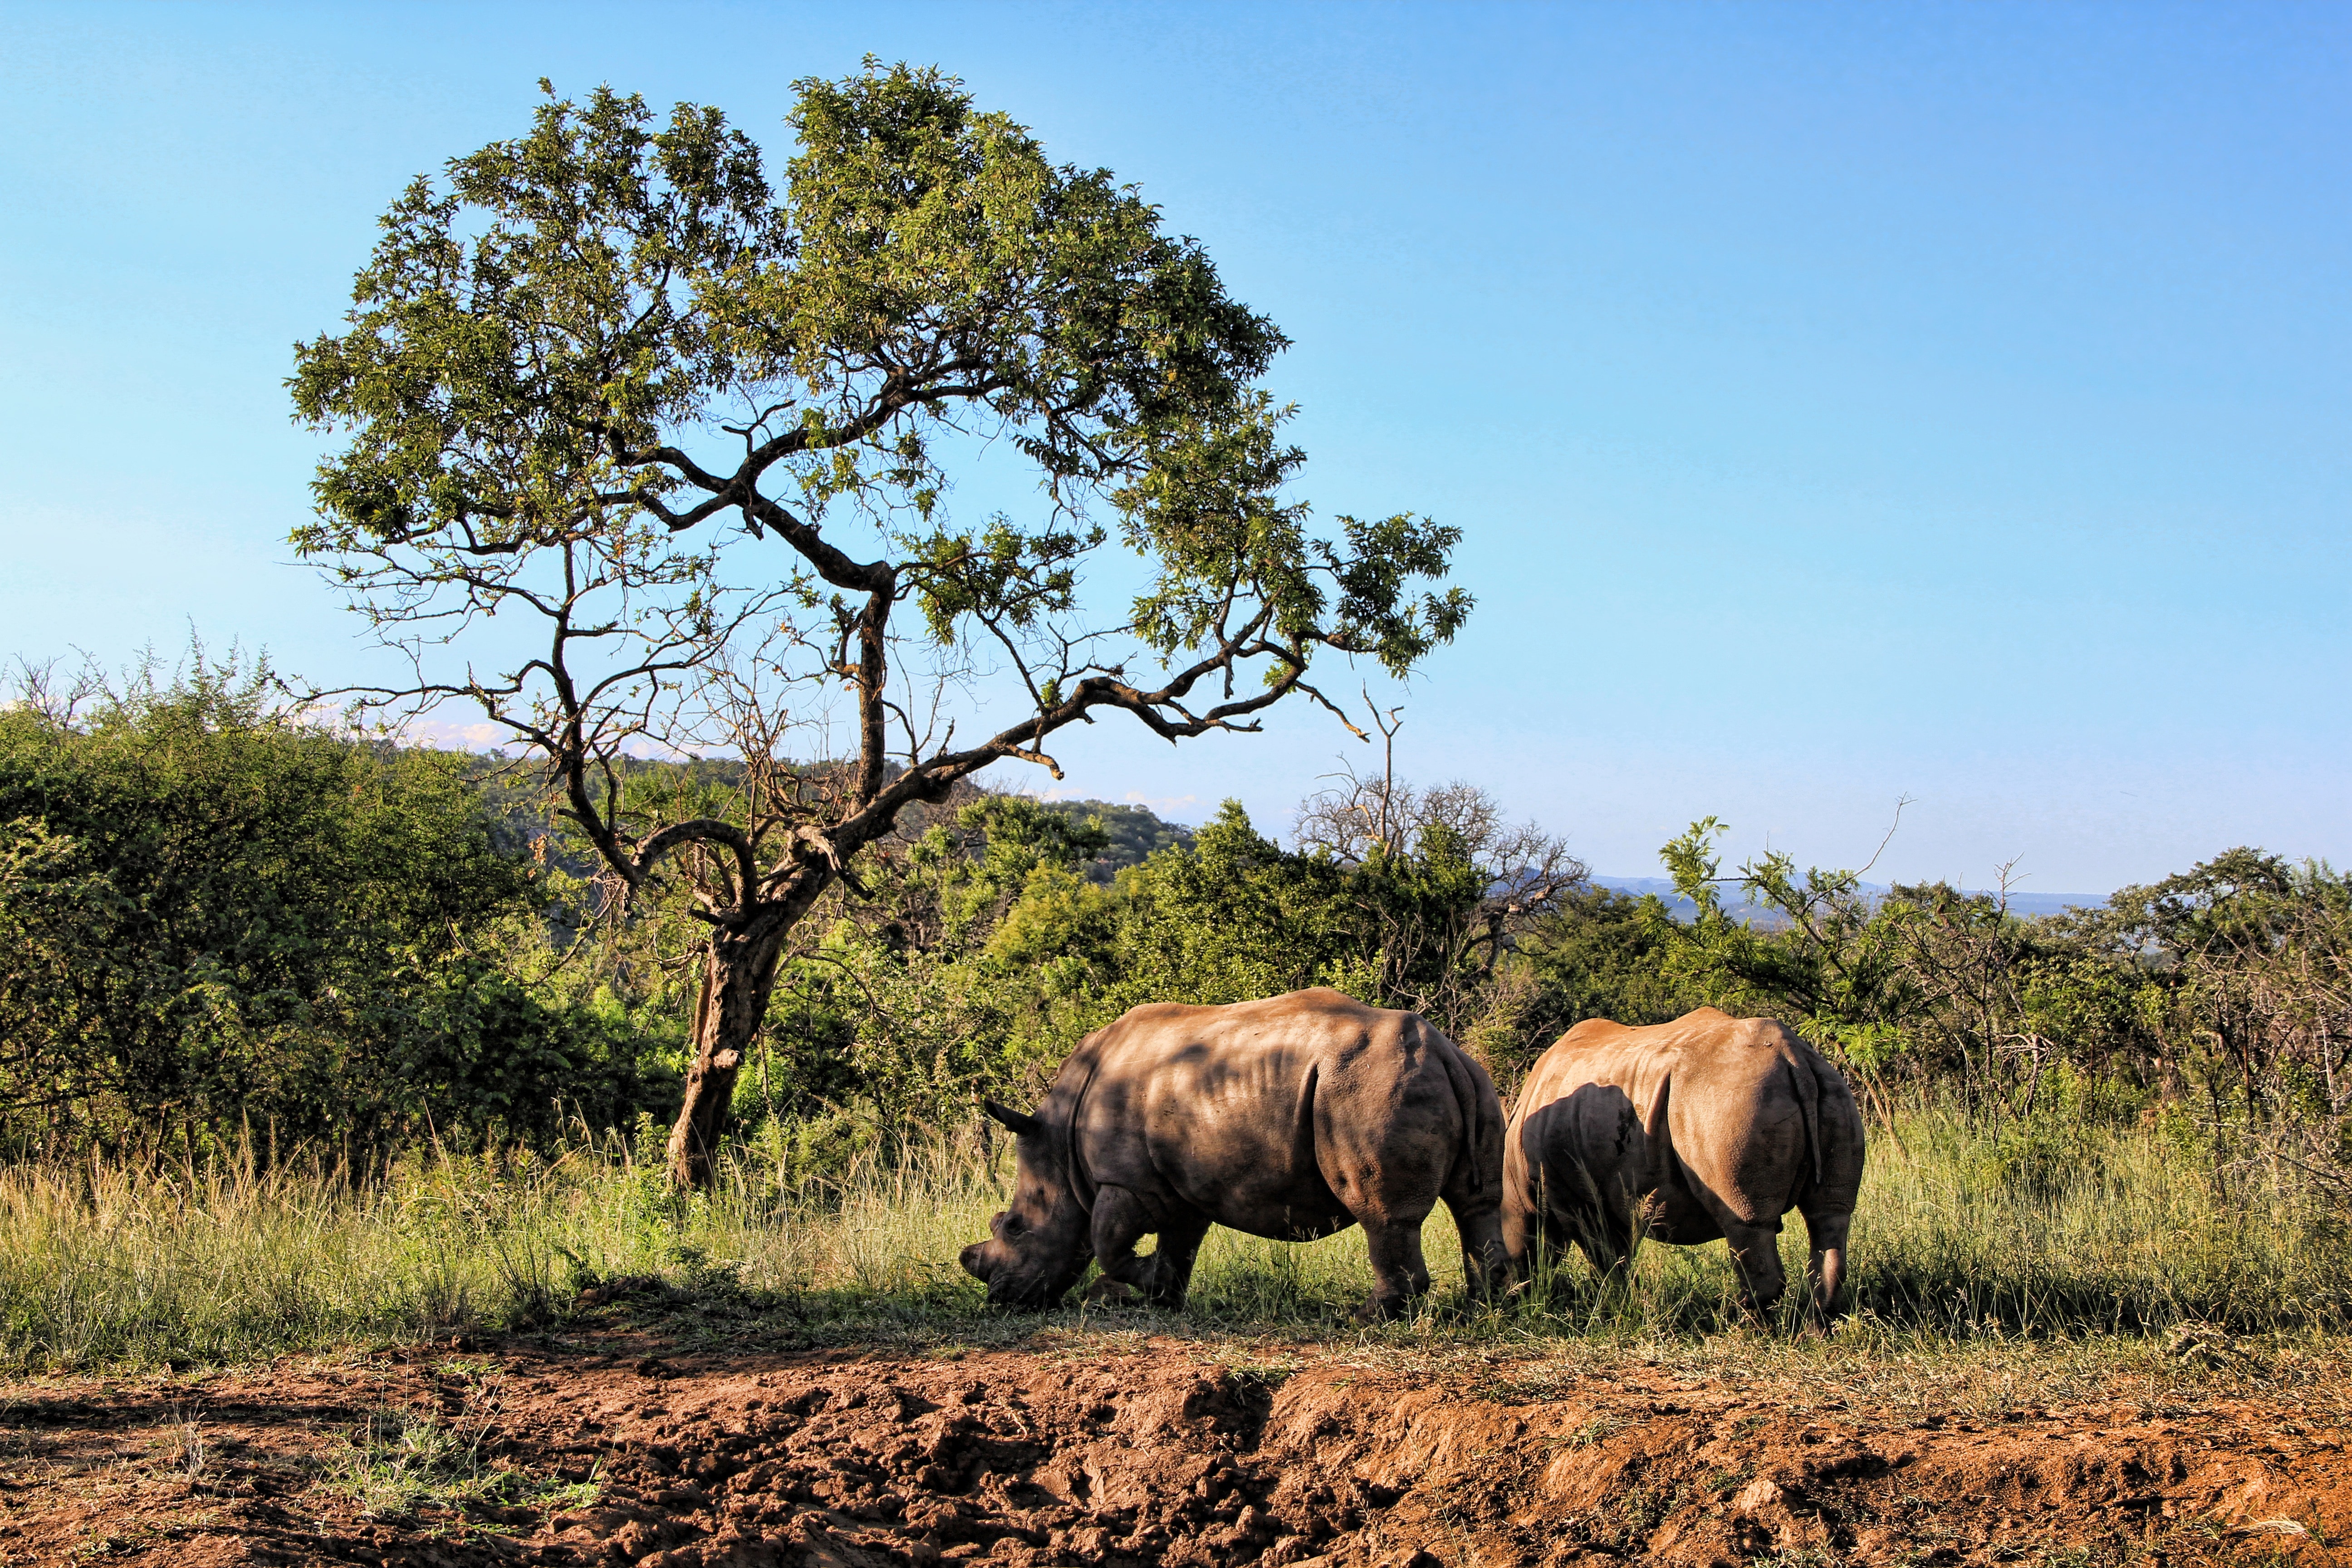 Rhino, Animal World, Pachyderm, animals in the wild, animal wildlife